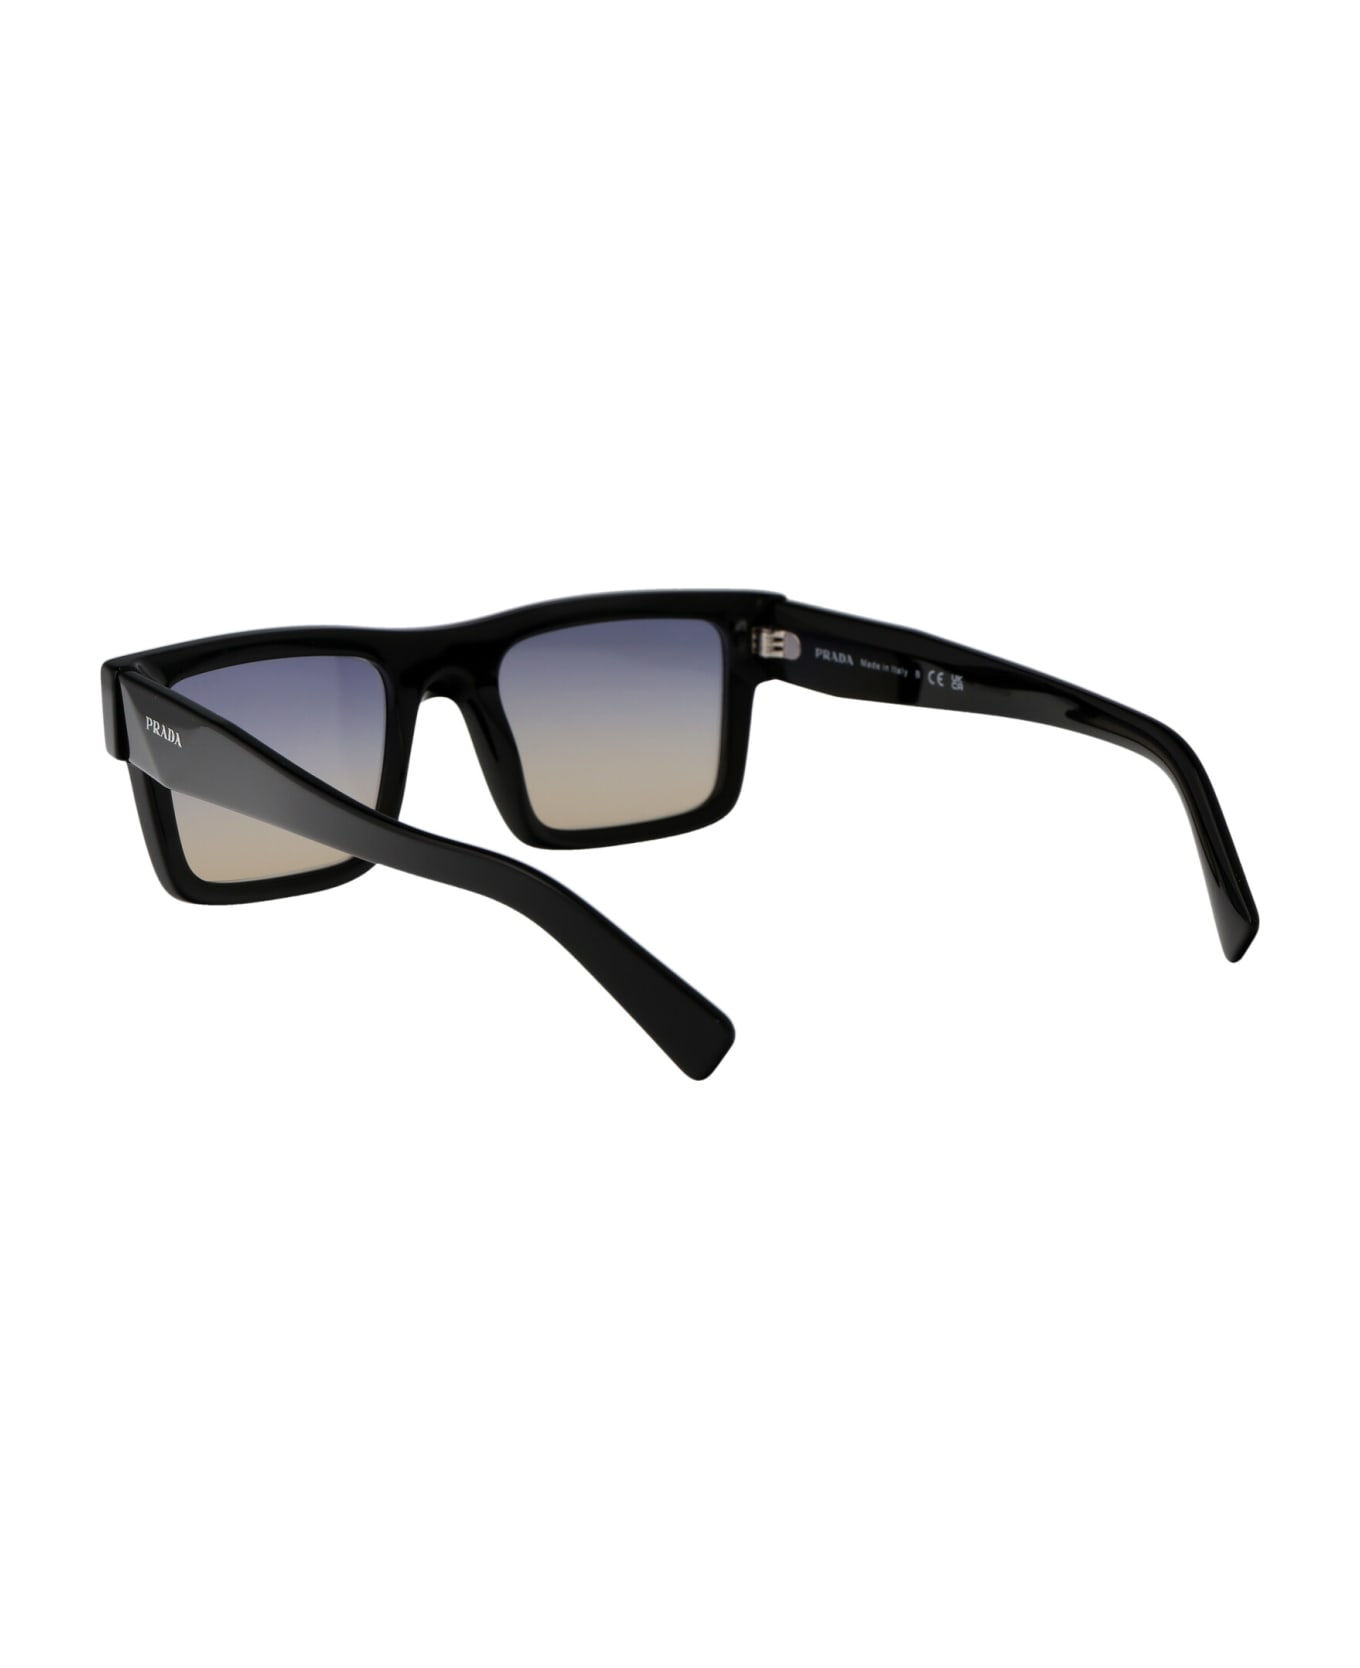 Prada Eyewear 0pr 19ws Sunglasses - 1AB06Z Black